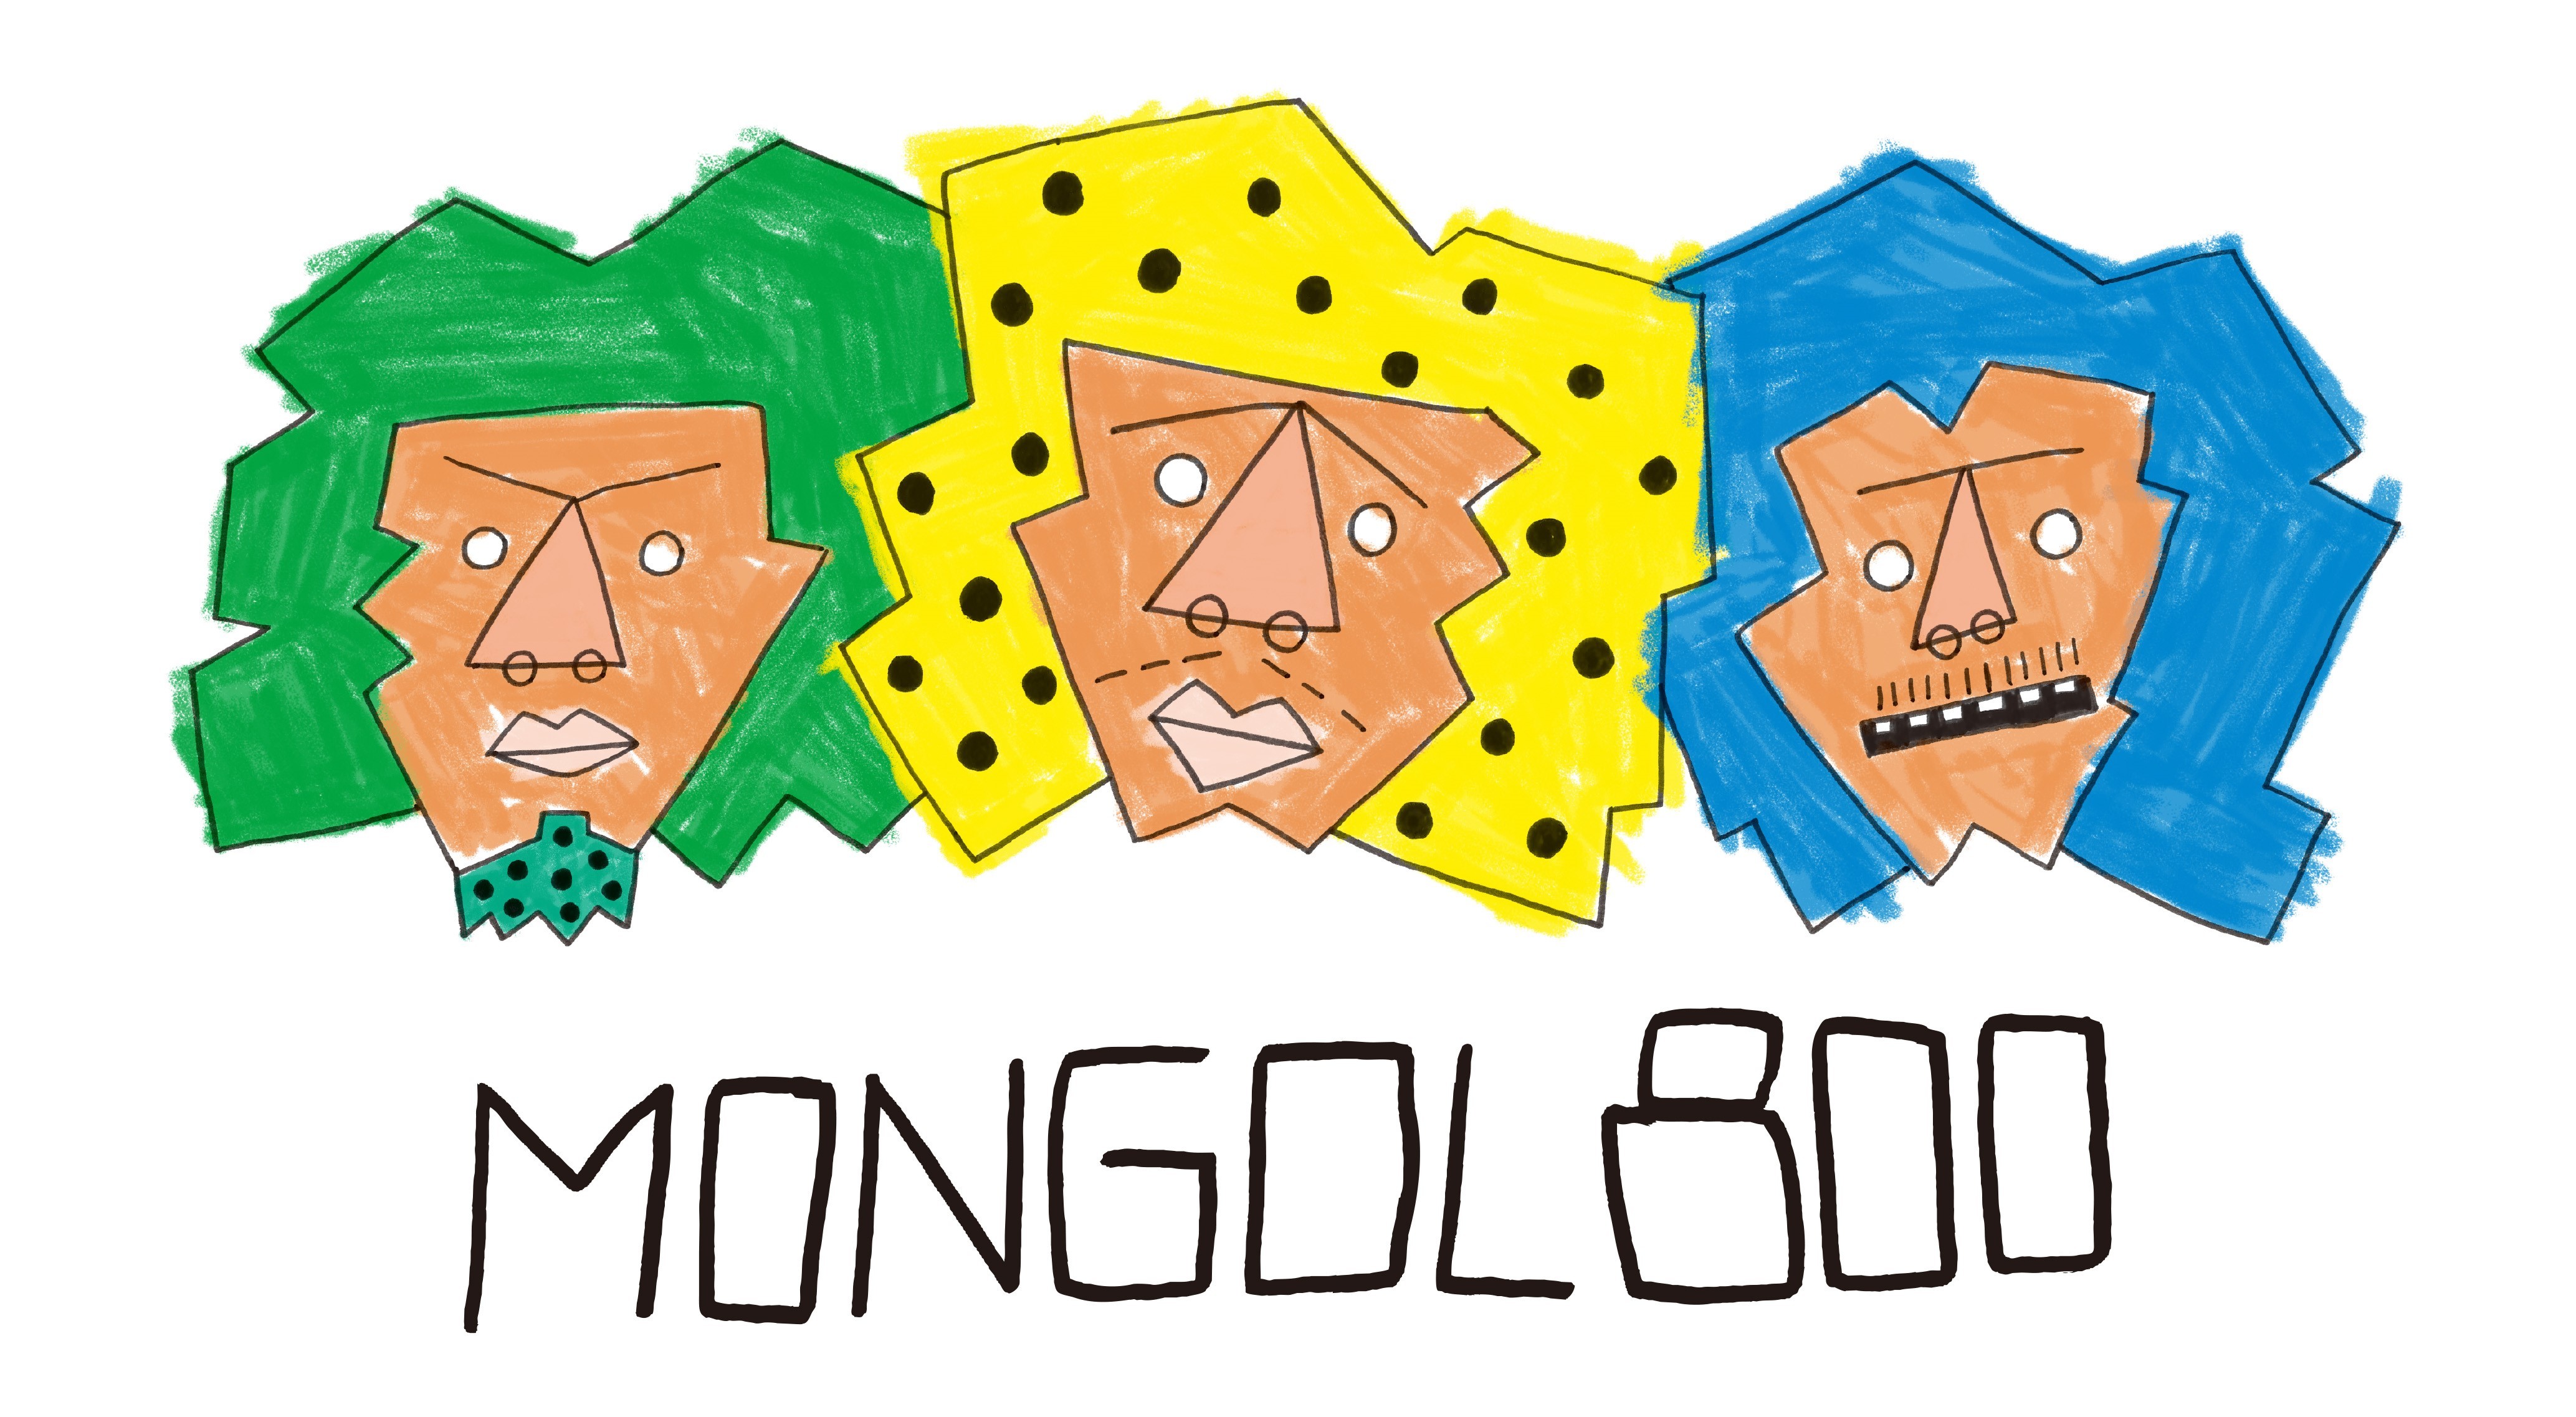 MONGOL800